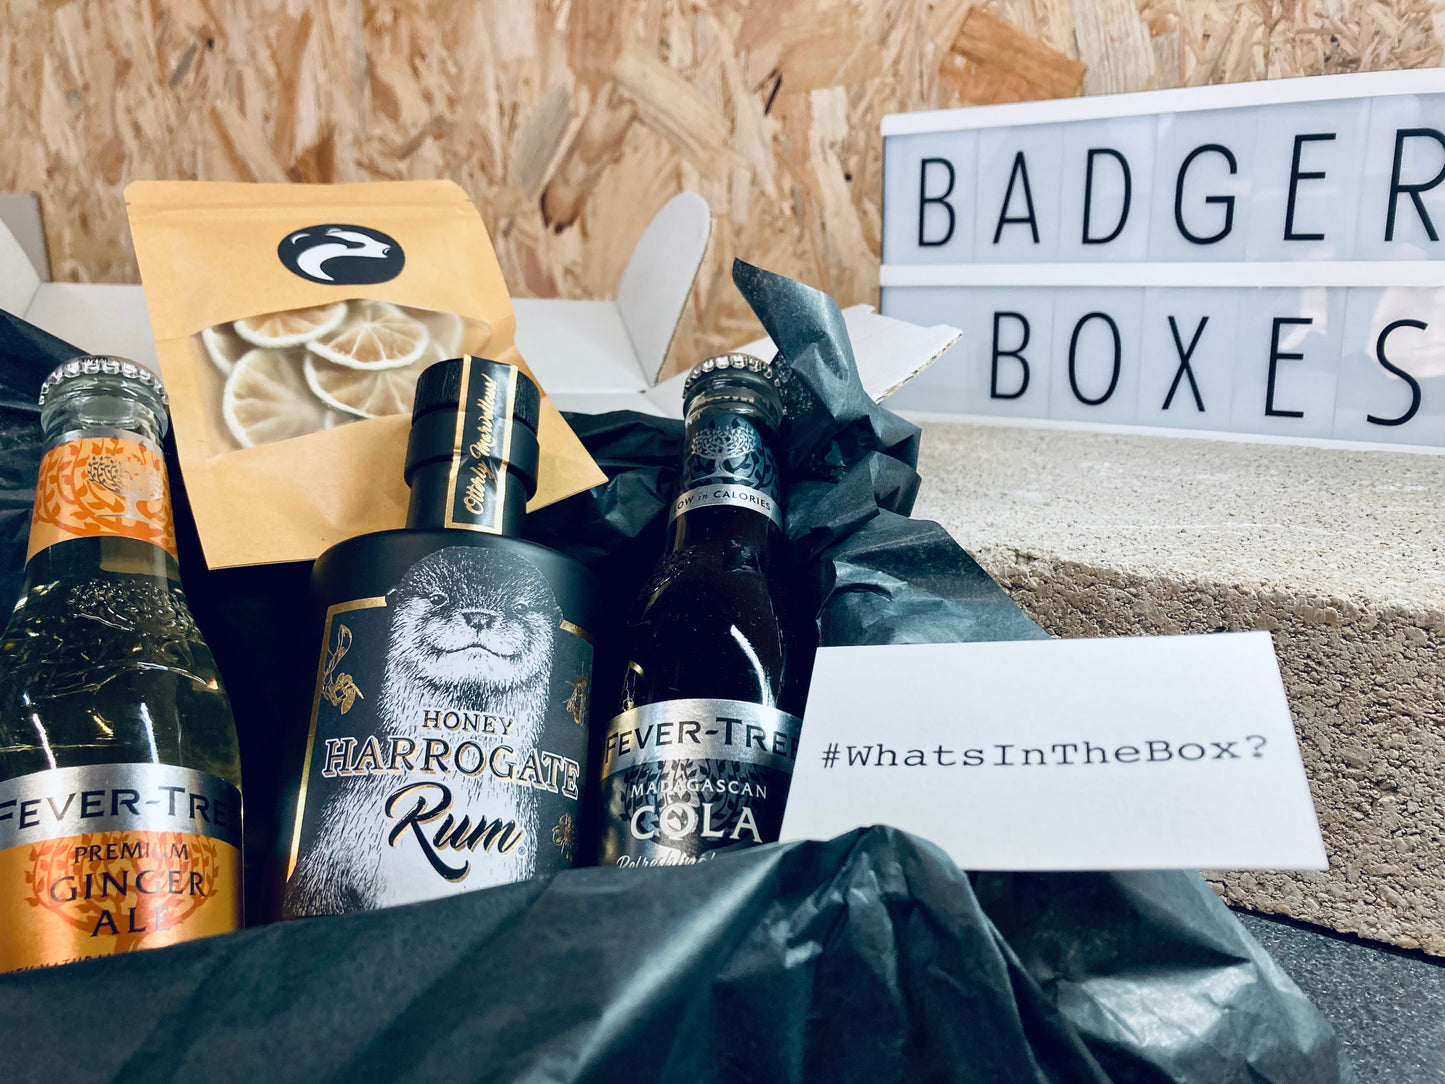 Badger 20cl Rum Box - Harrogate Rum